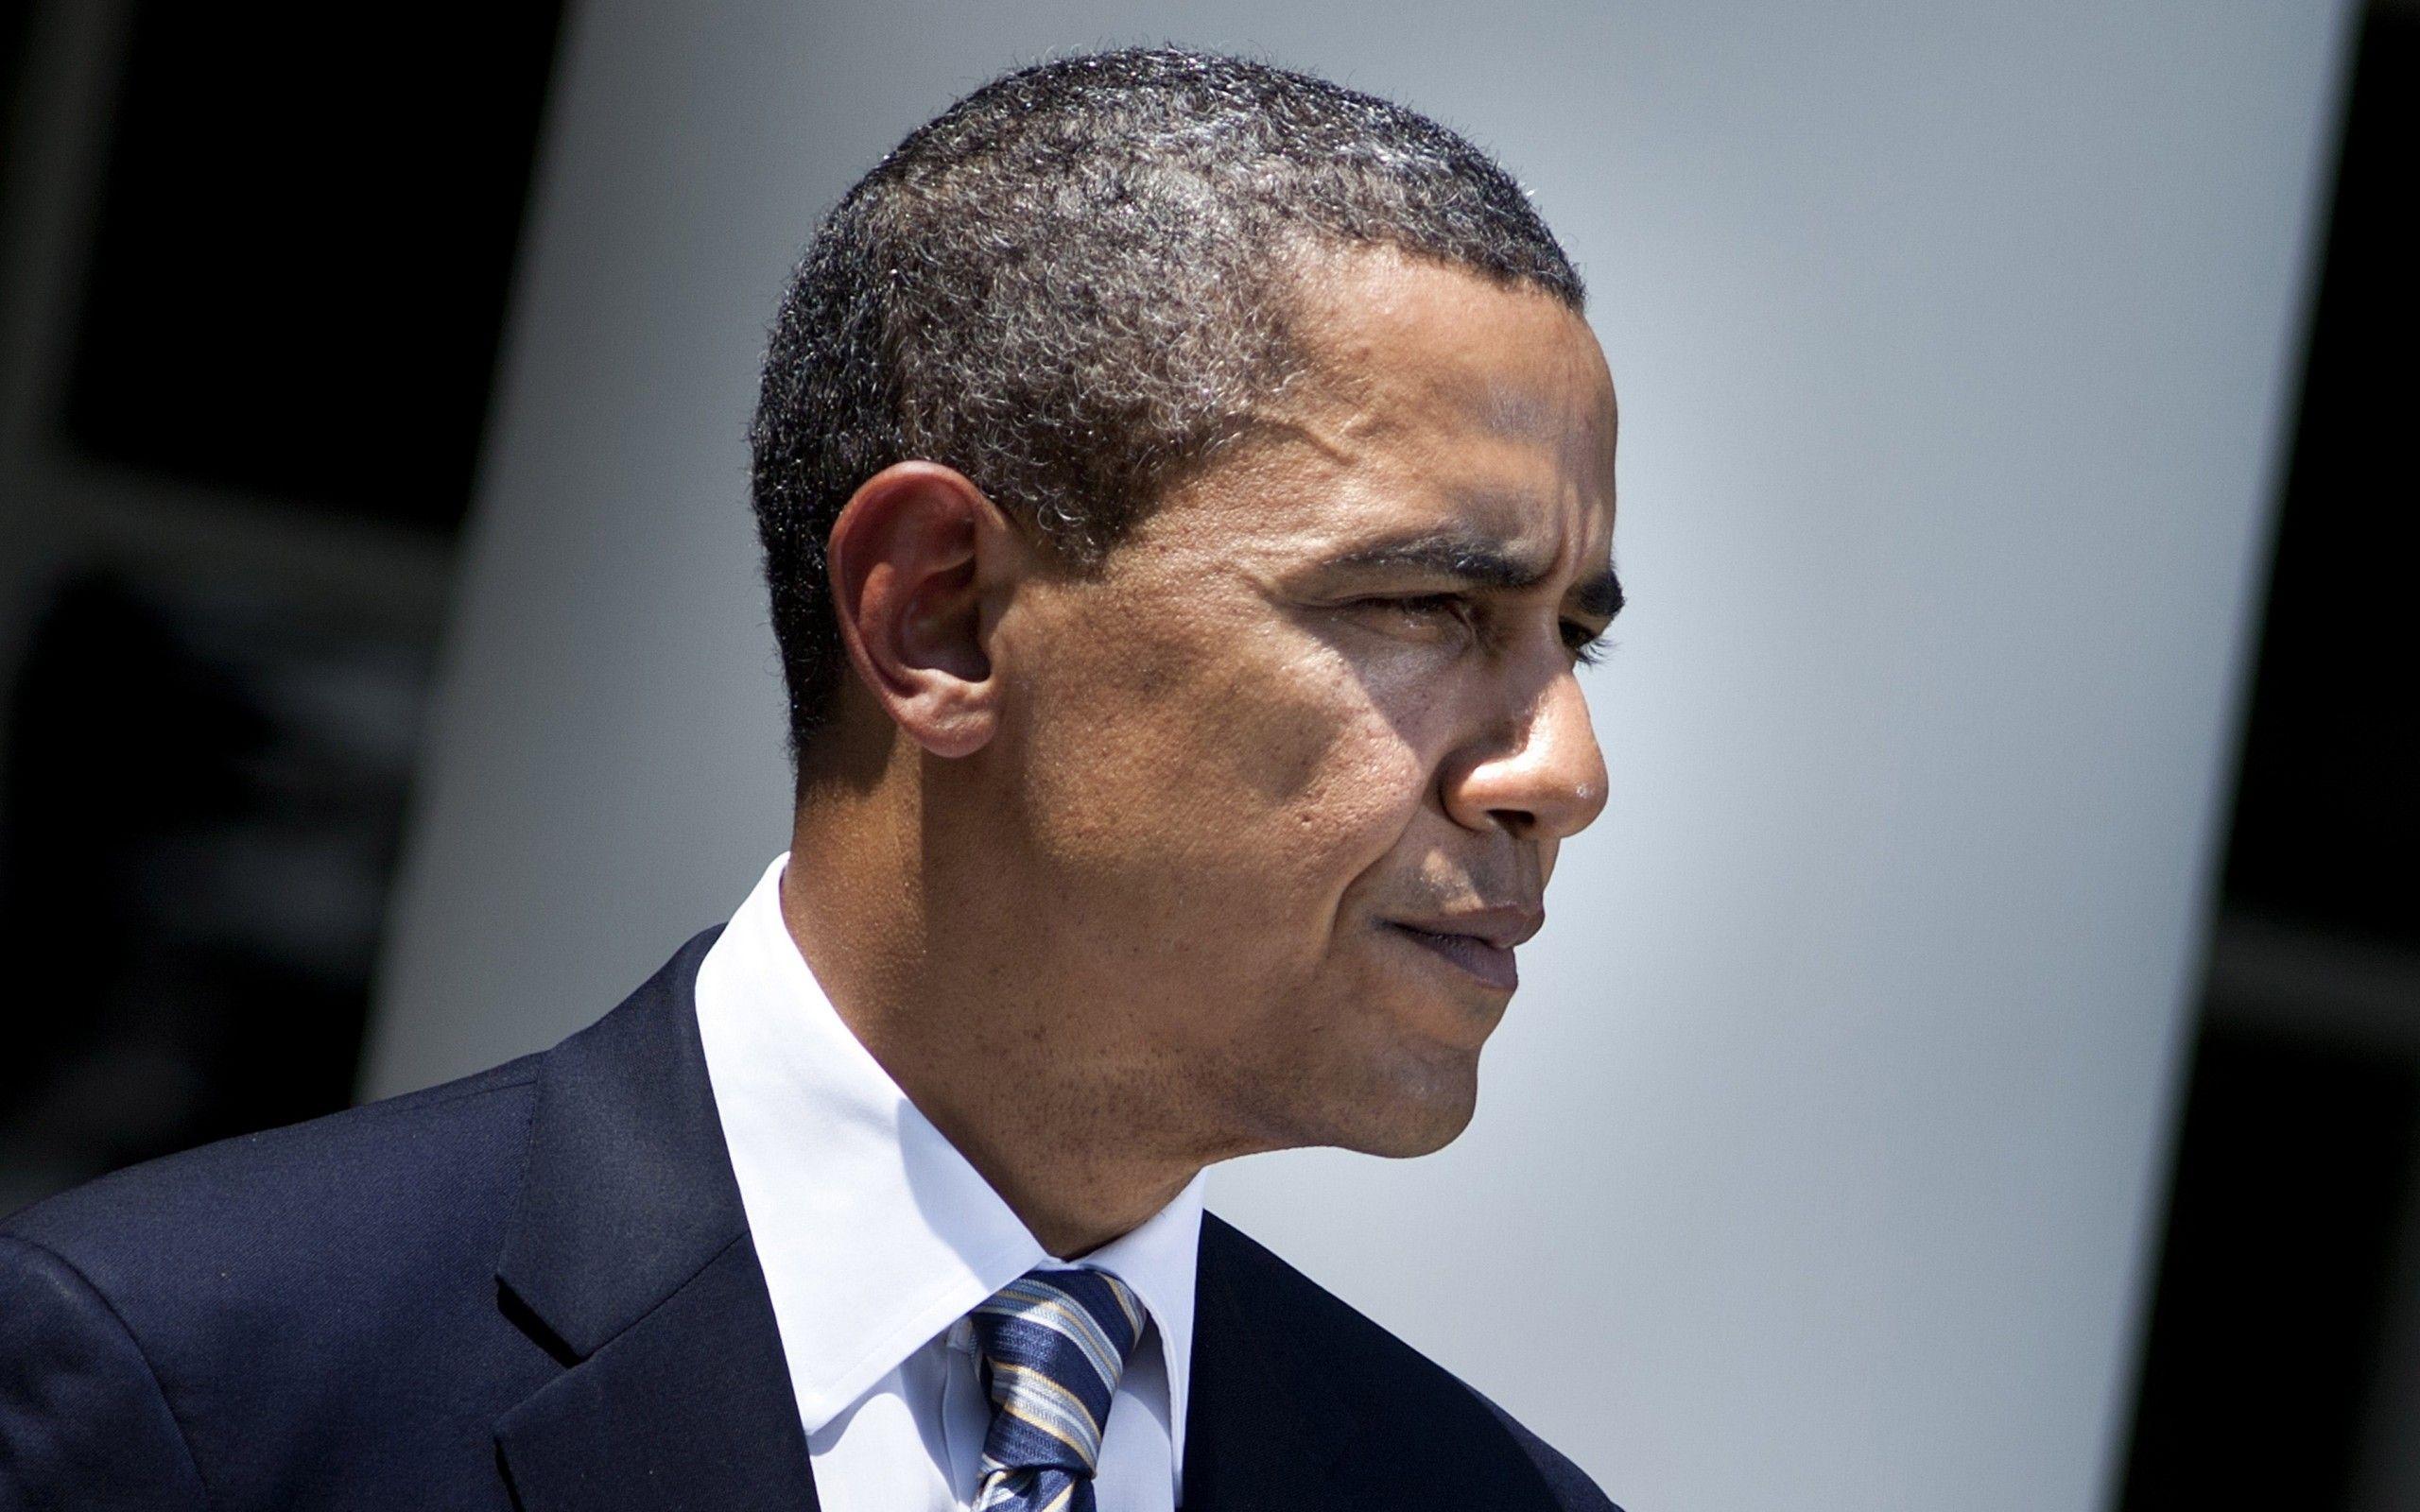 President Barack Obama HD Image Photo & Wallpaper Free Download